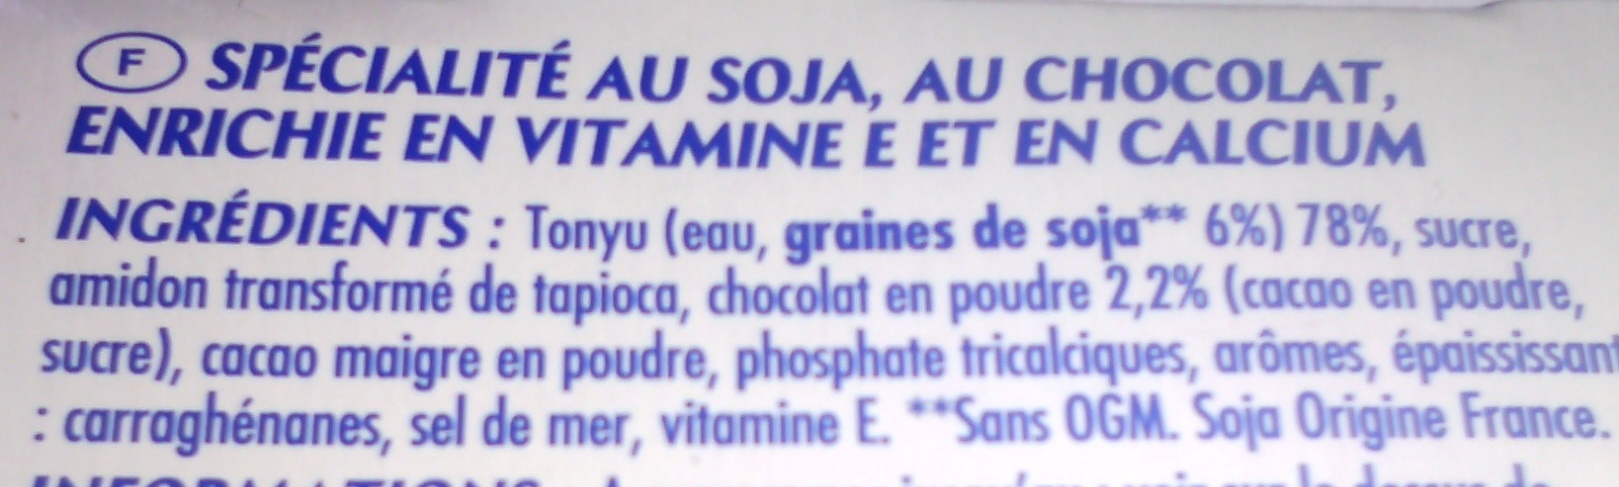 Soja chocolat (4 Pots) - Ingredients - fr